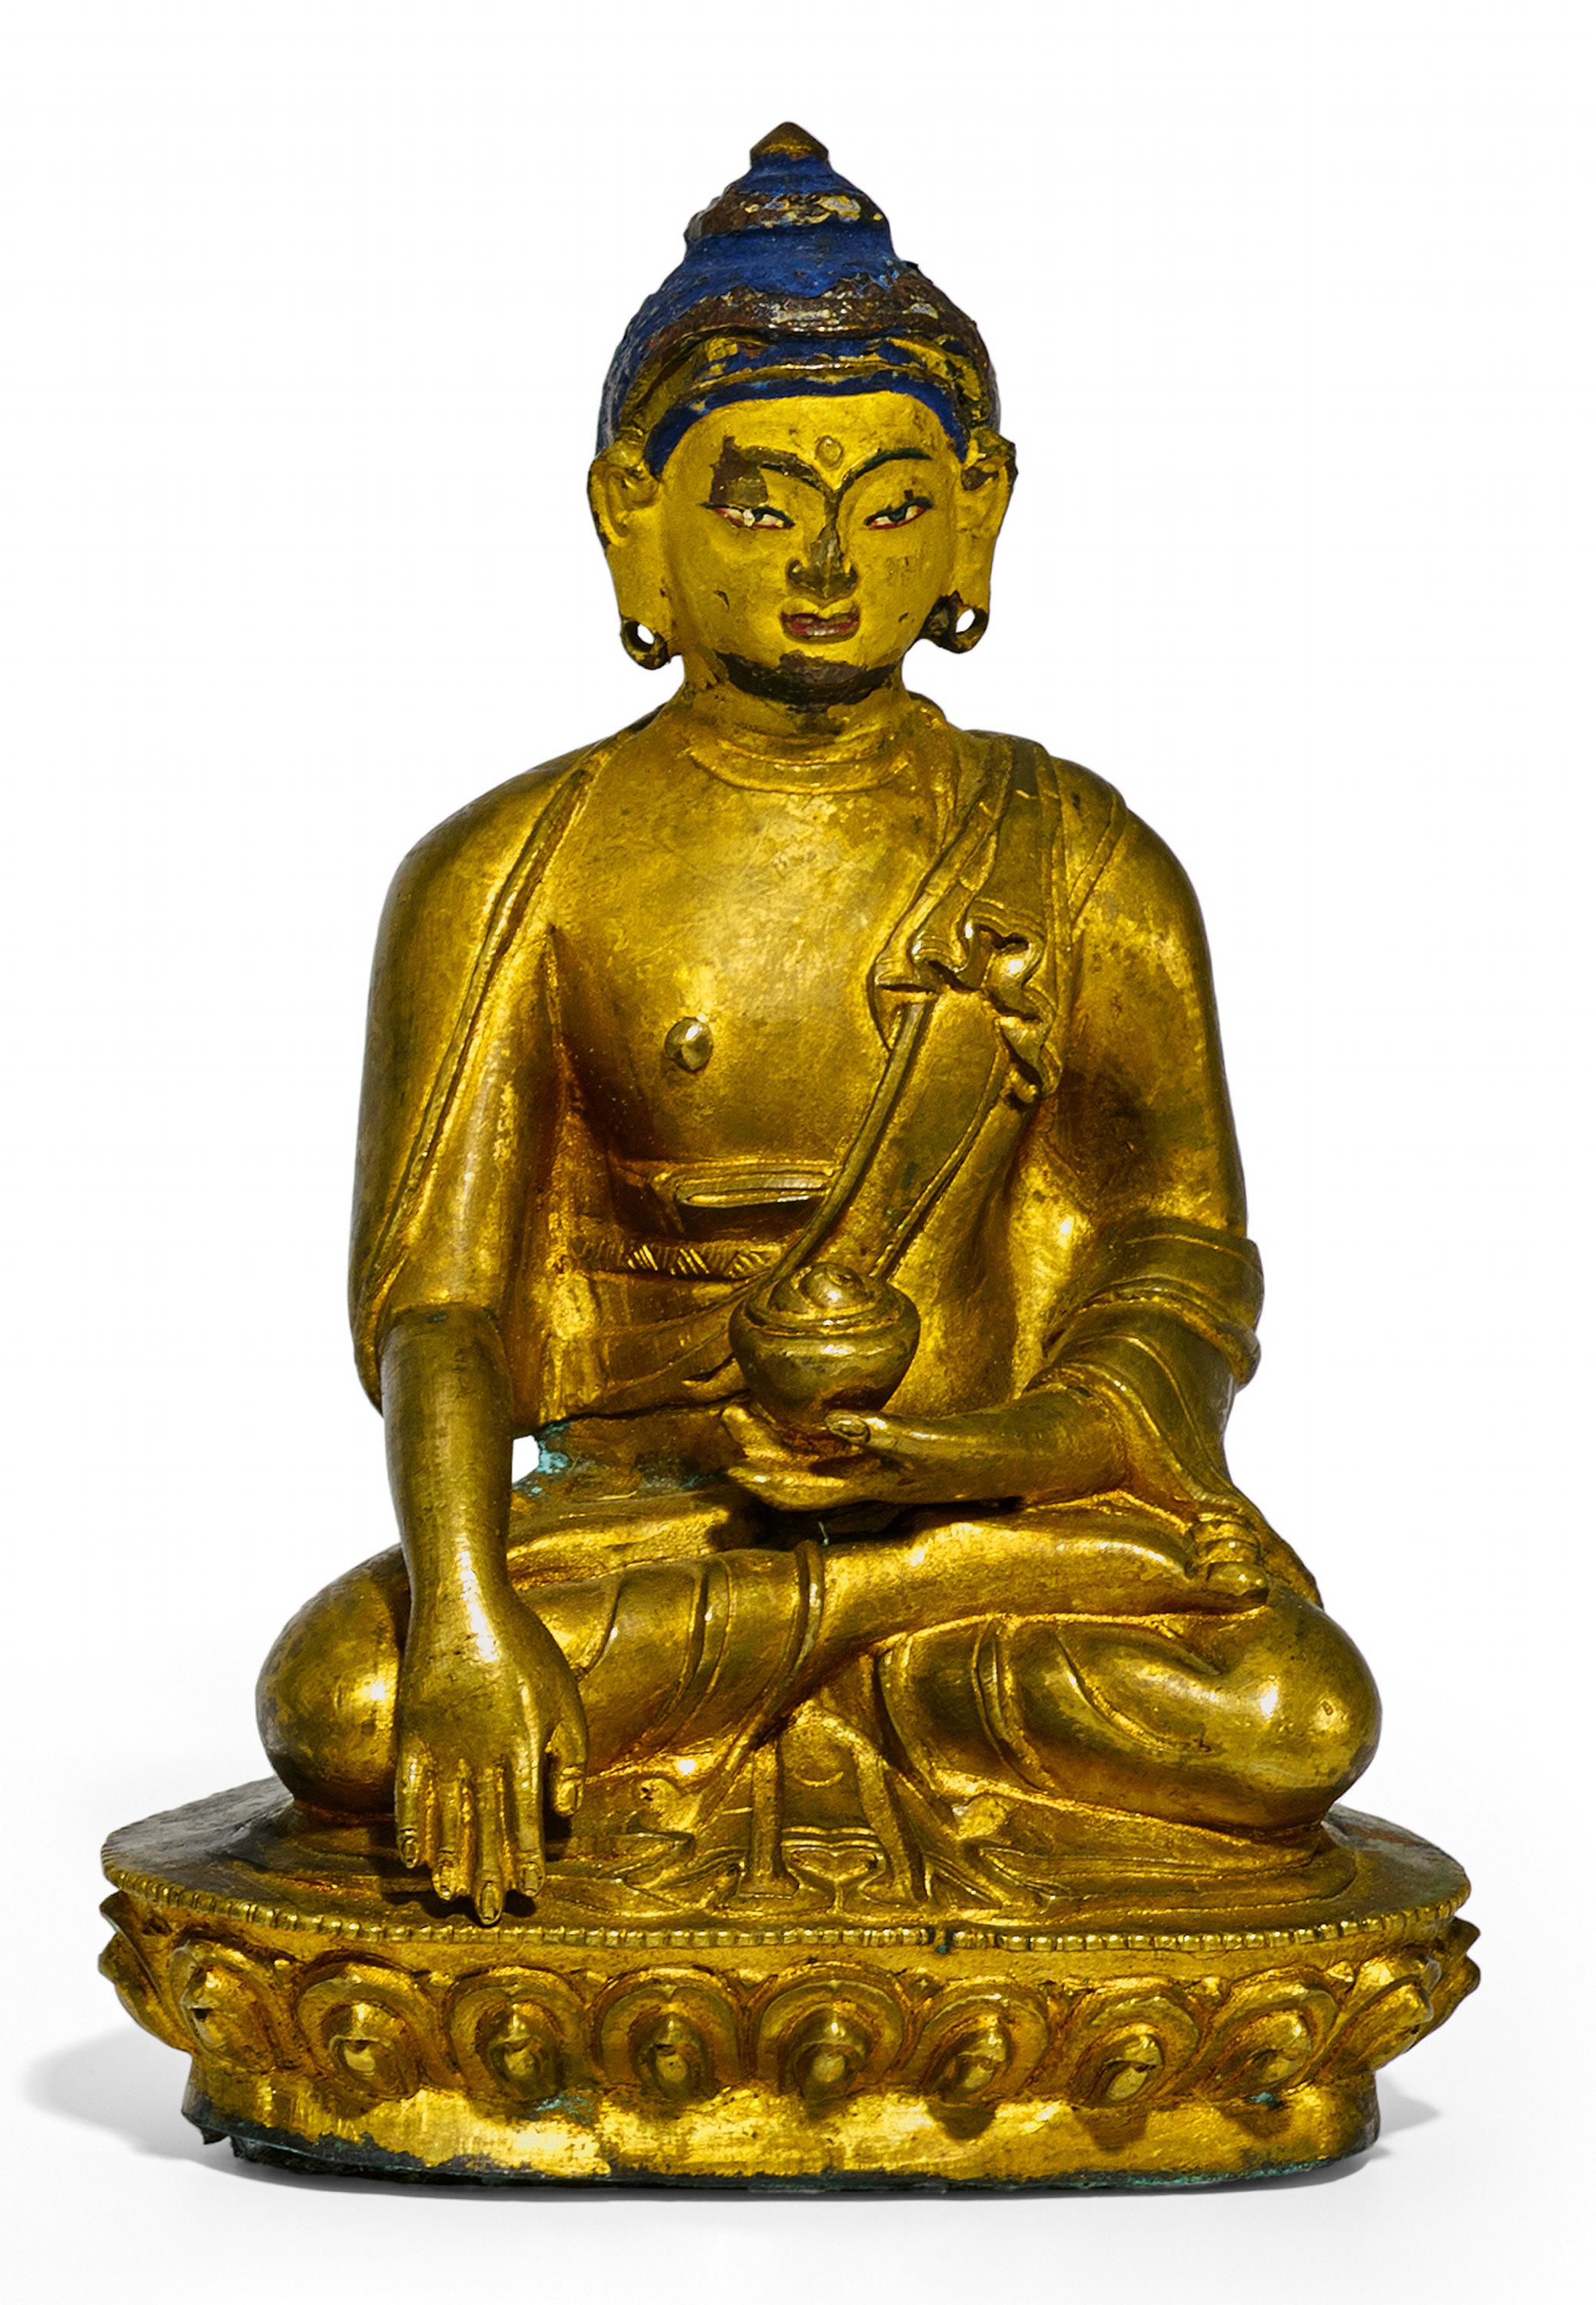 BUDDHA SHAKYAMUNI WITH ALM BOWL. Origin: Tibet. Date: 18th/19th c. Technique: Old, fire gild bronze.